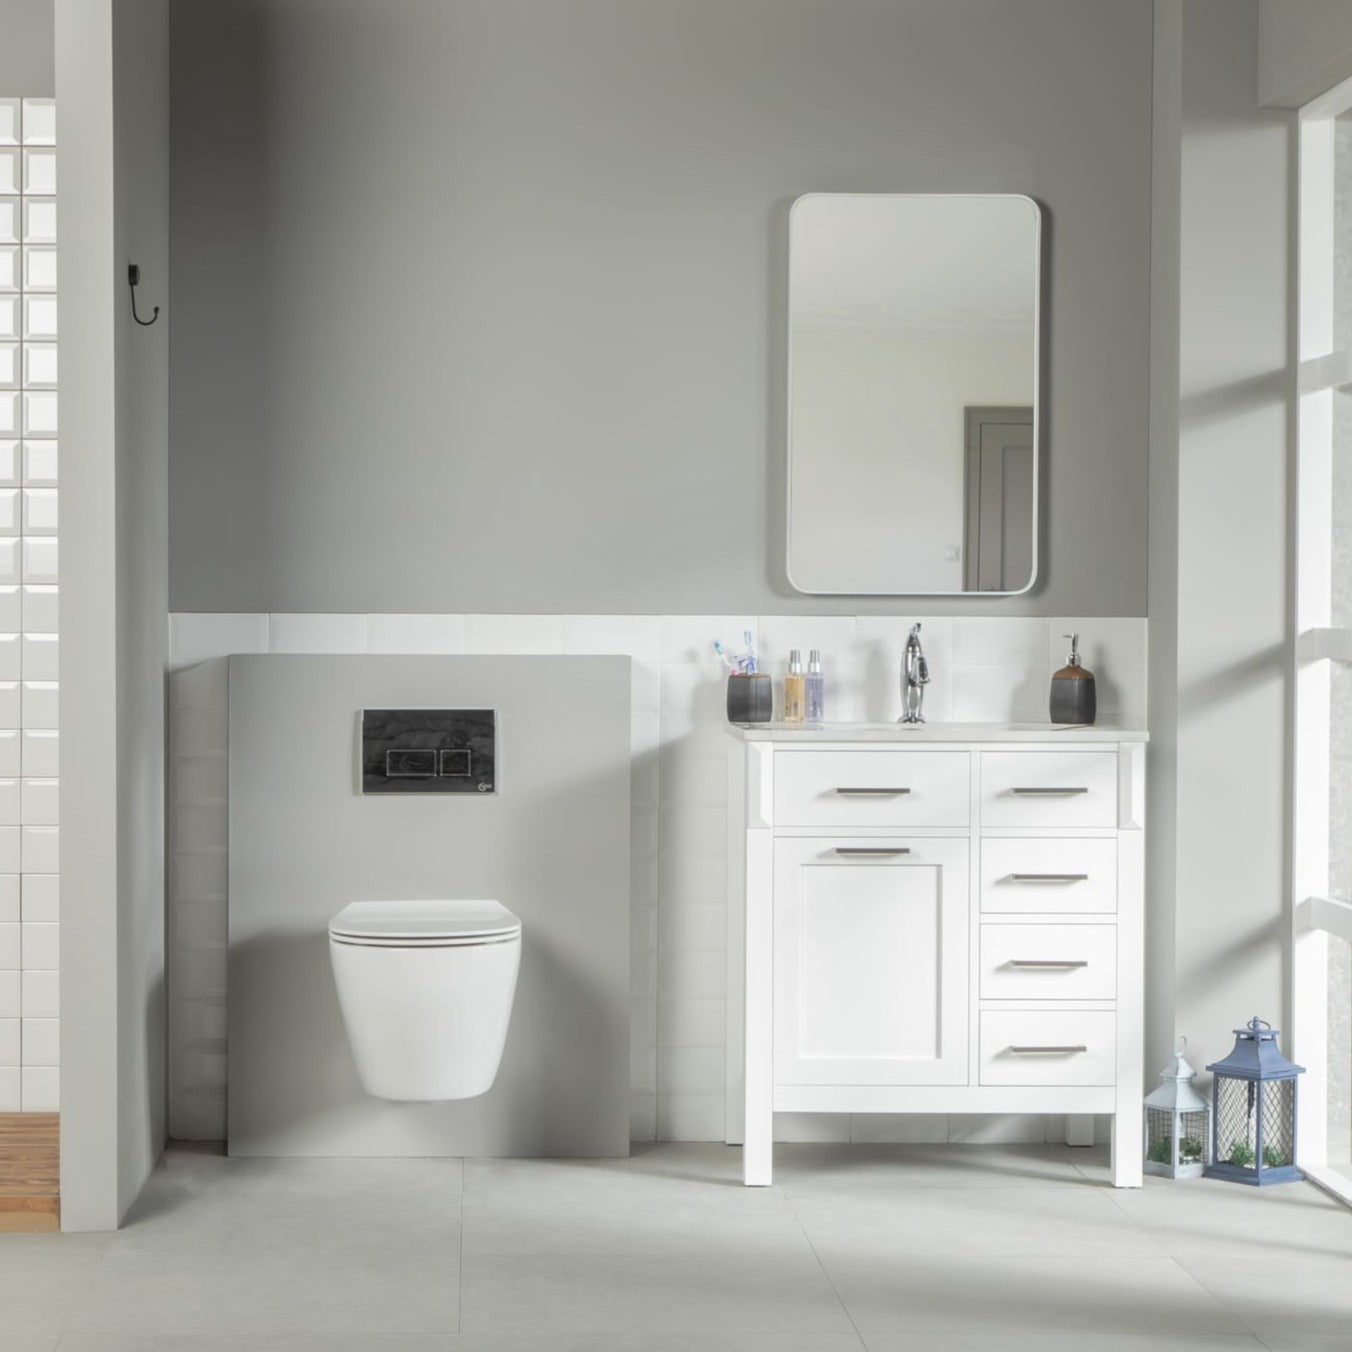 Fawna Bathroom Vanity Homelero 30"  #size_30"  #color_white  #hardware_brushed nickel